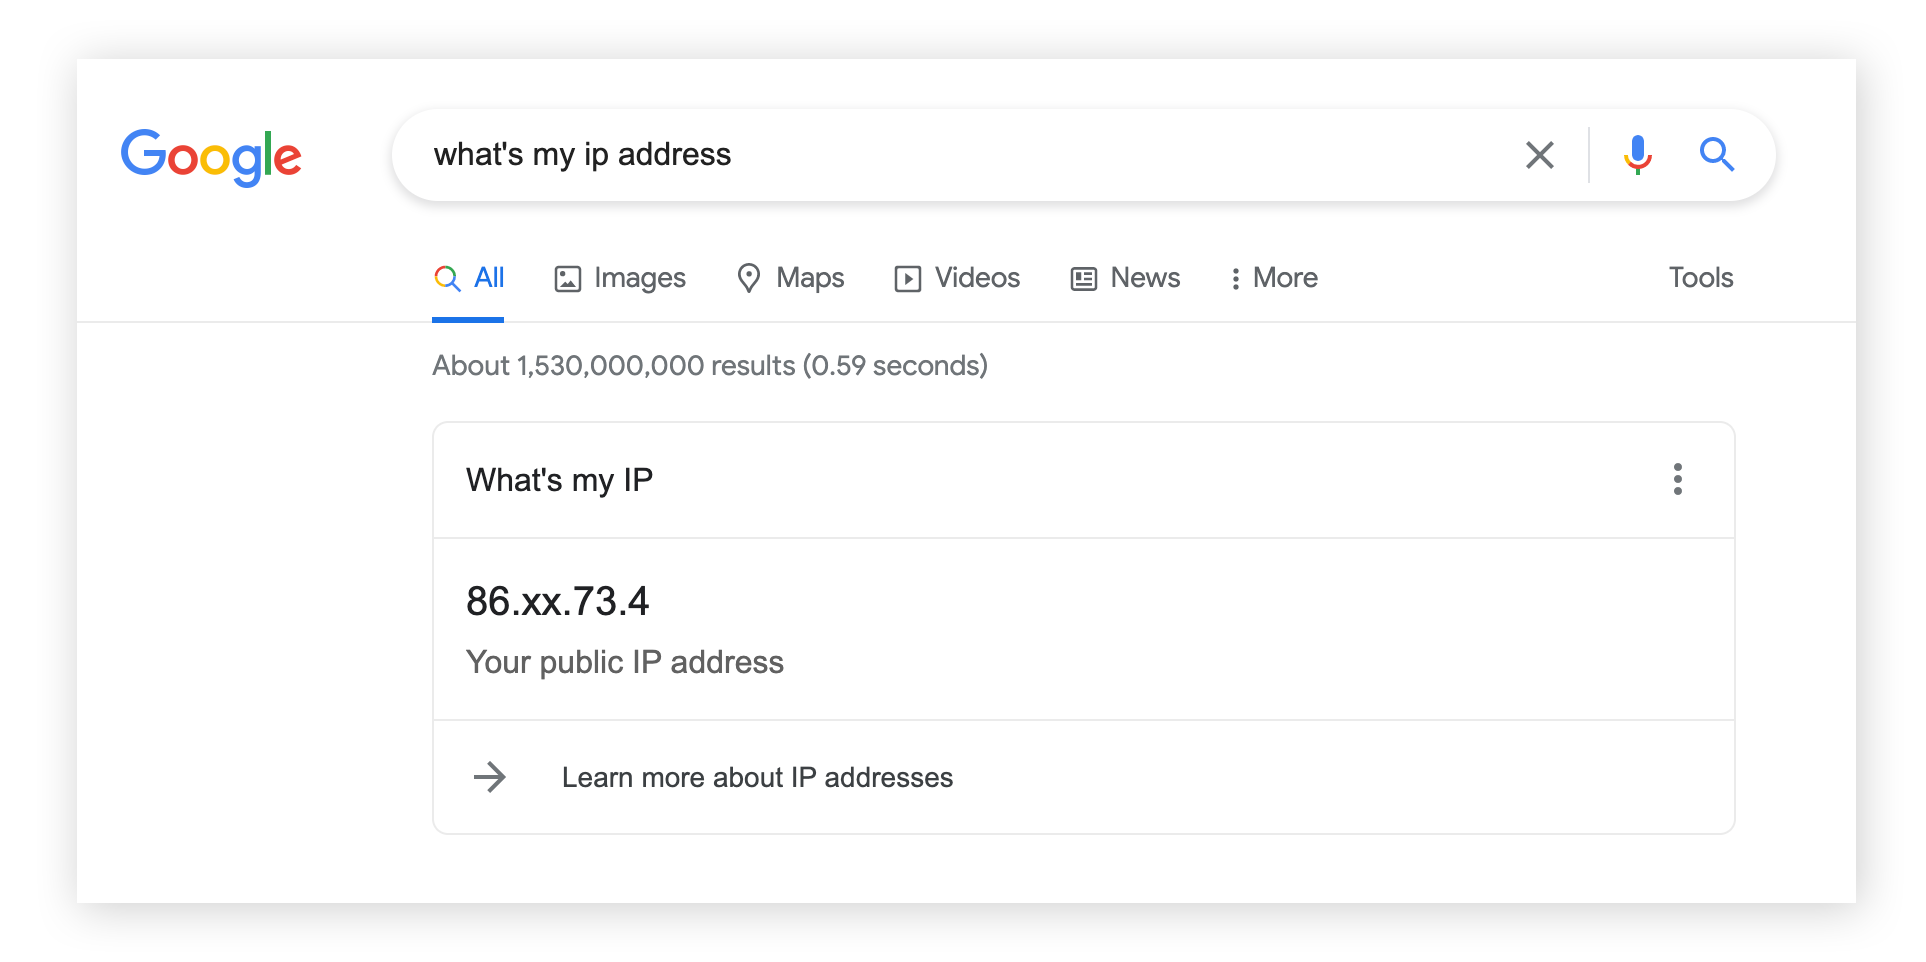 Using Google to identify your public IP address